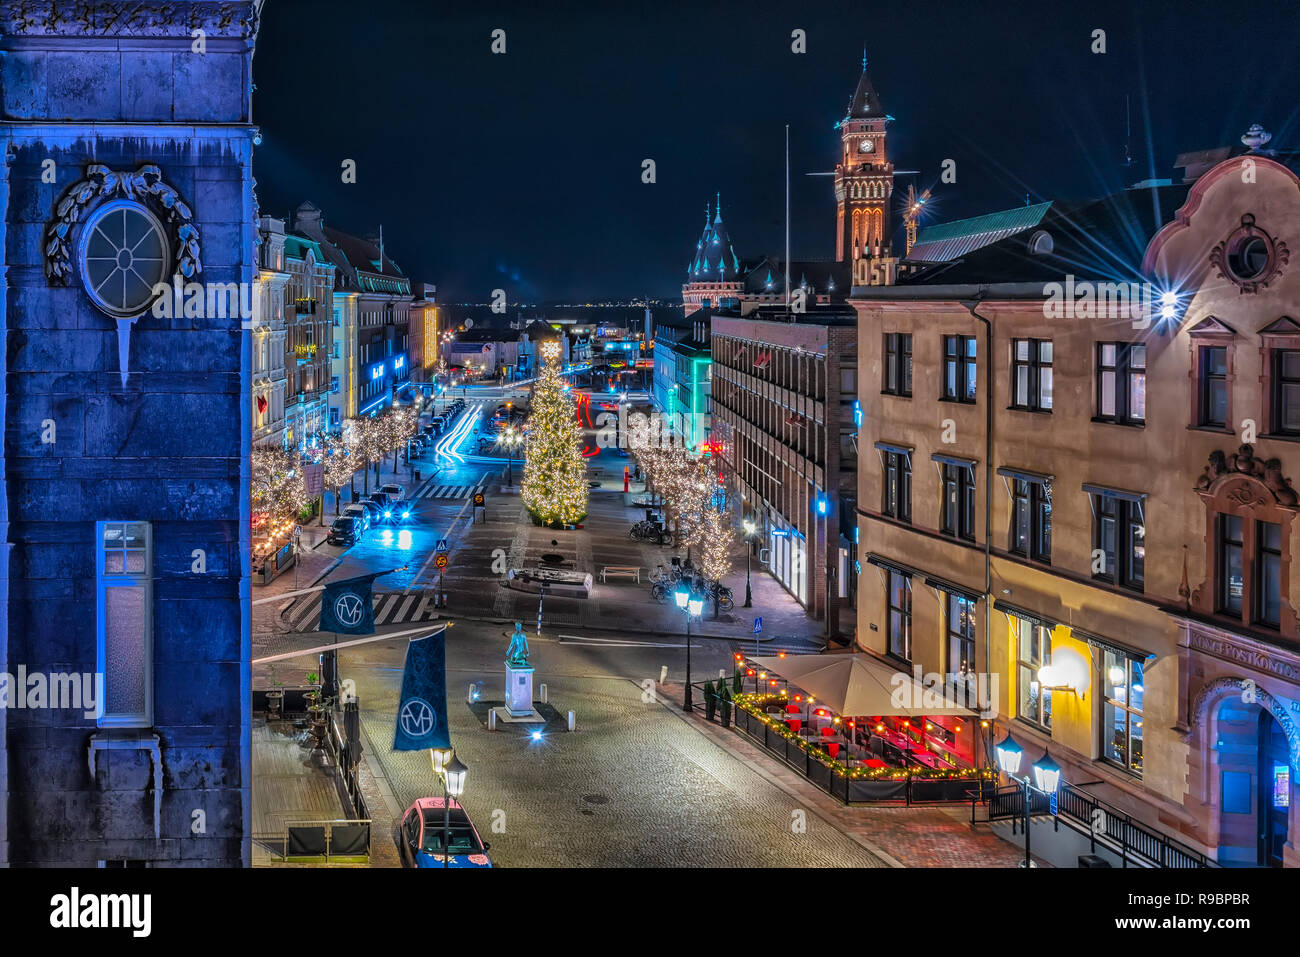 HELSINGBORG, SWEDEN - DECEMBER 05, 2018: A long exposure night time scene of Helsingborgs main town square. Stock Photo